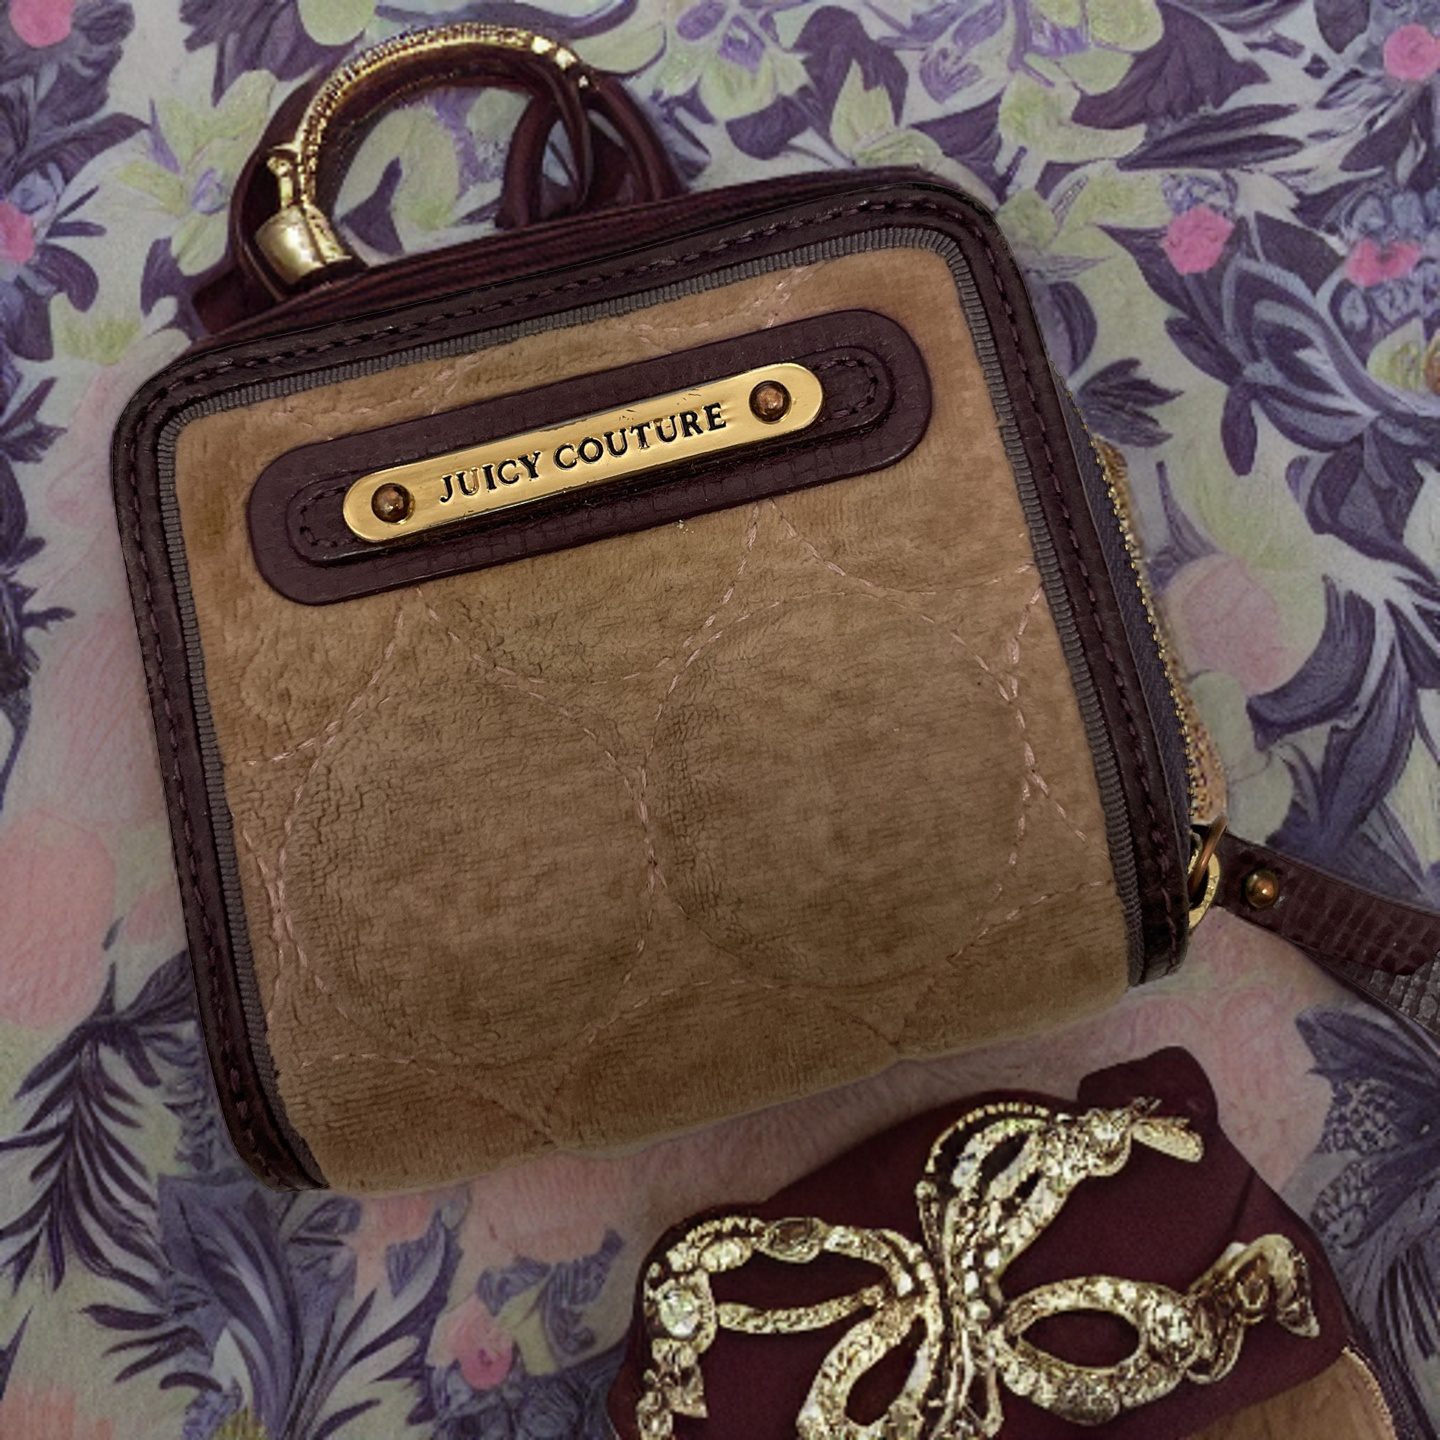 Rubynee Vintage y2k portable Juicy couture foldable brown leather wallet bag